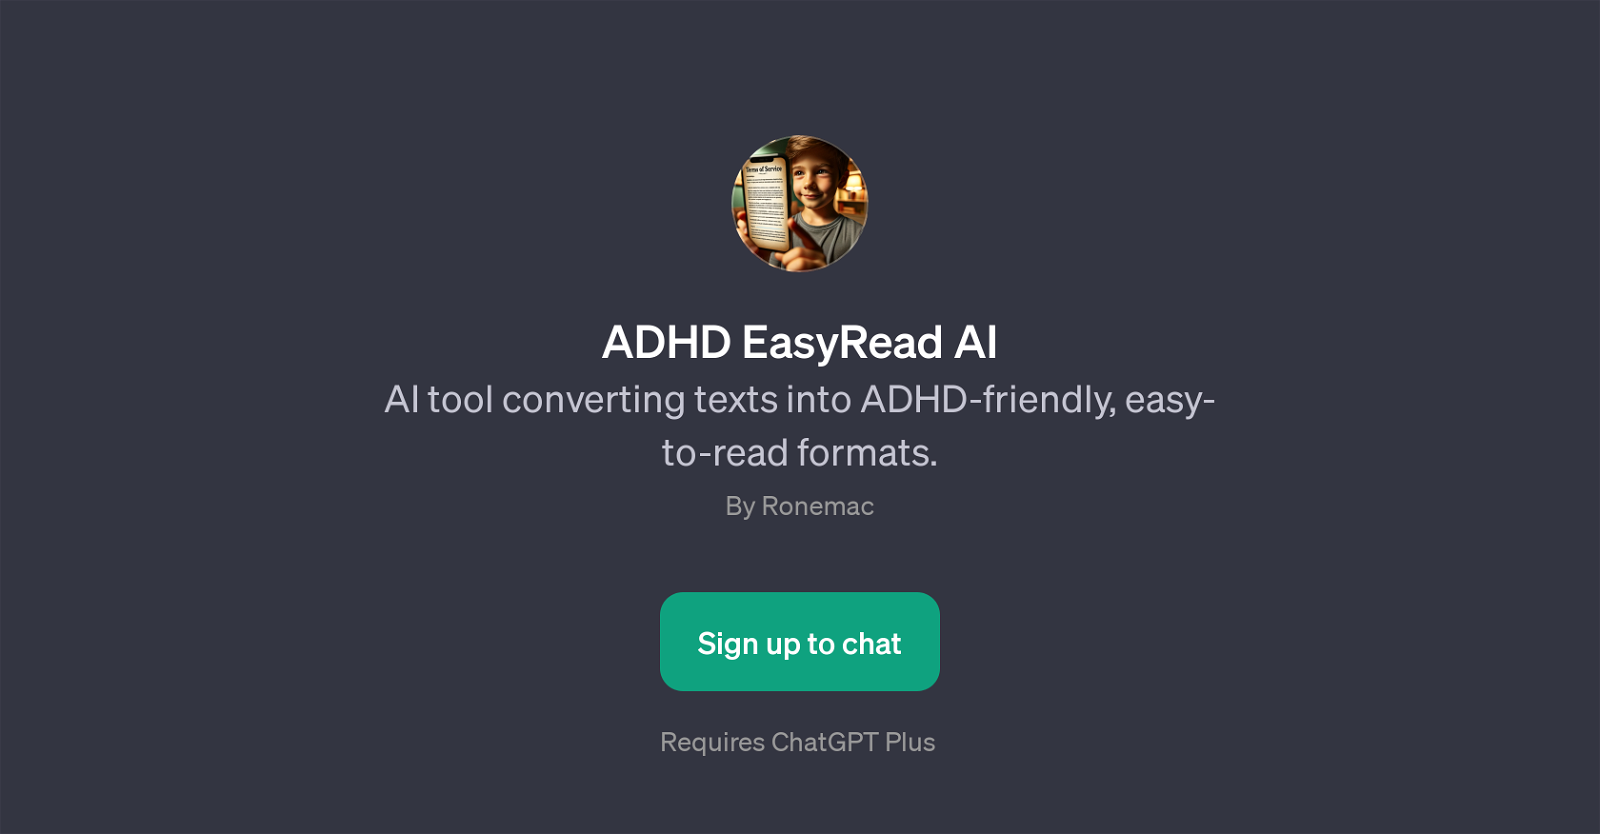 ADHD EasyRead AI website